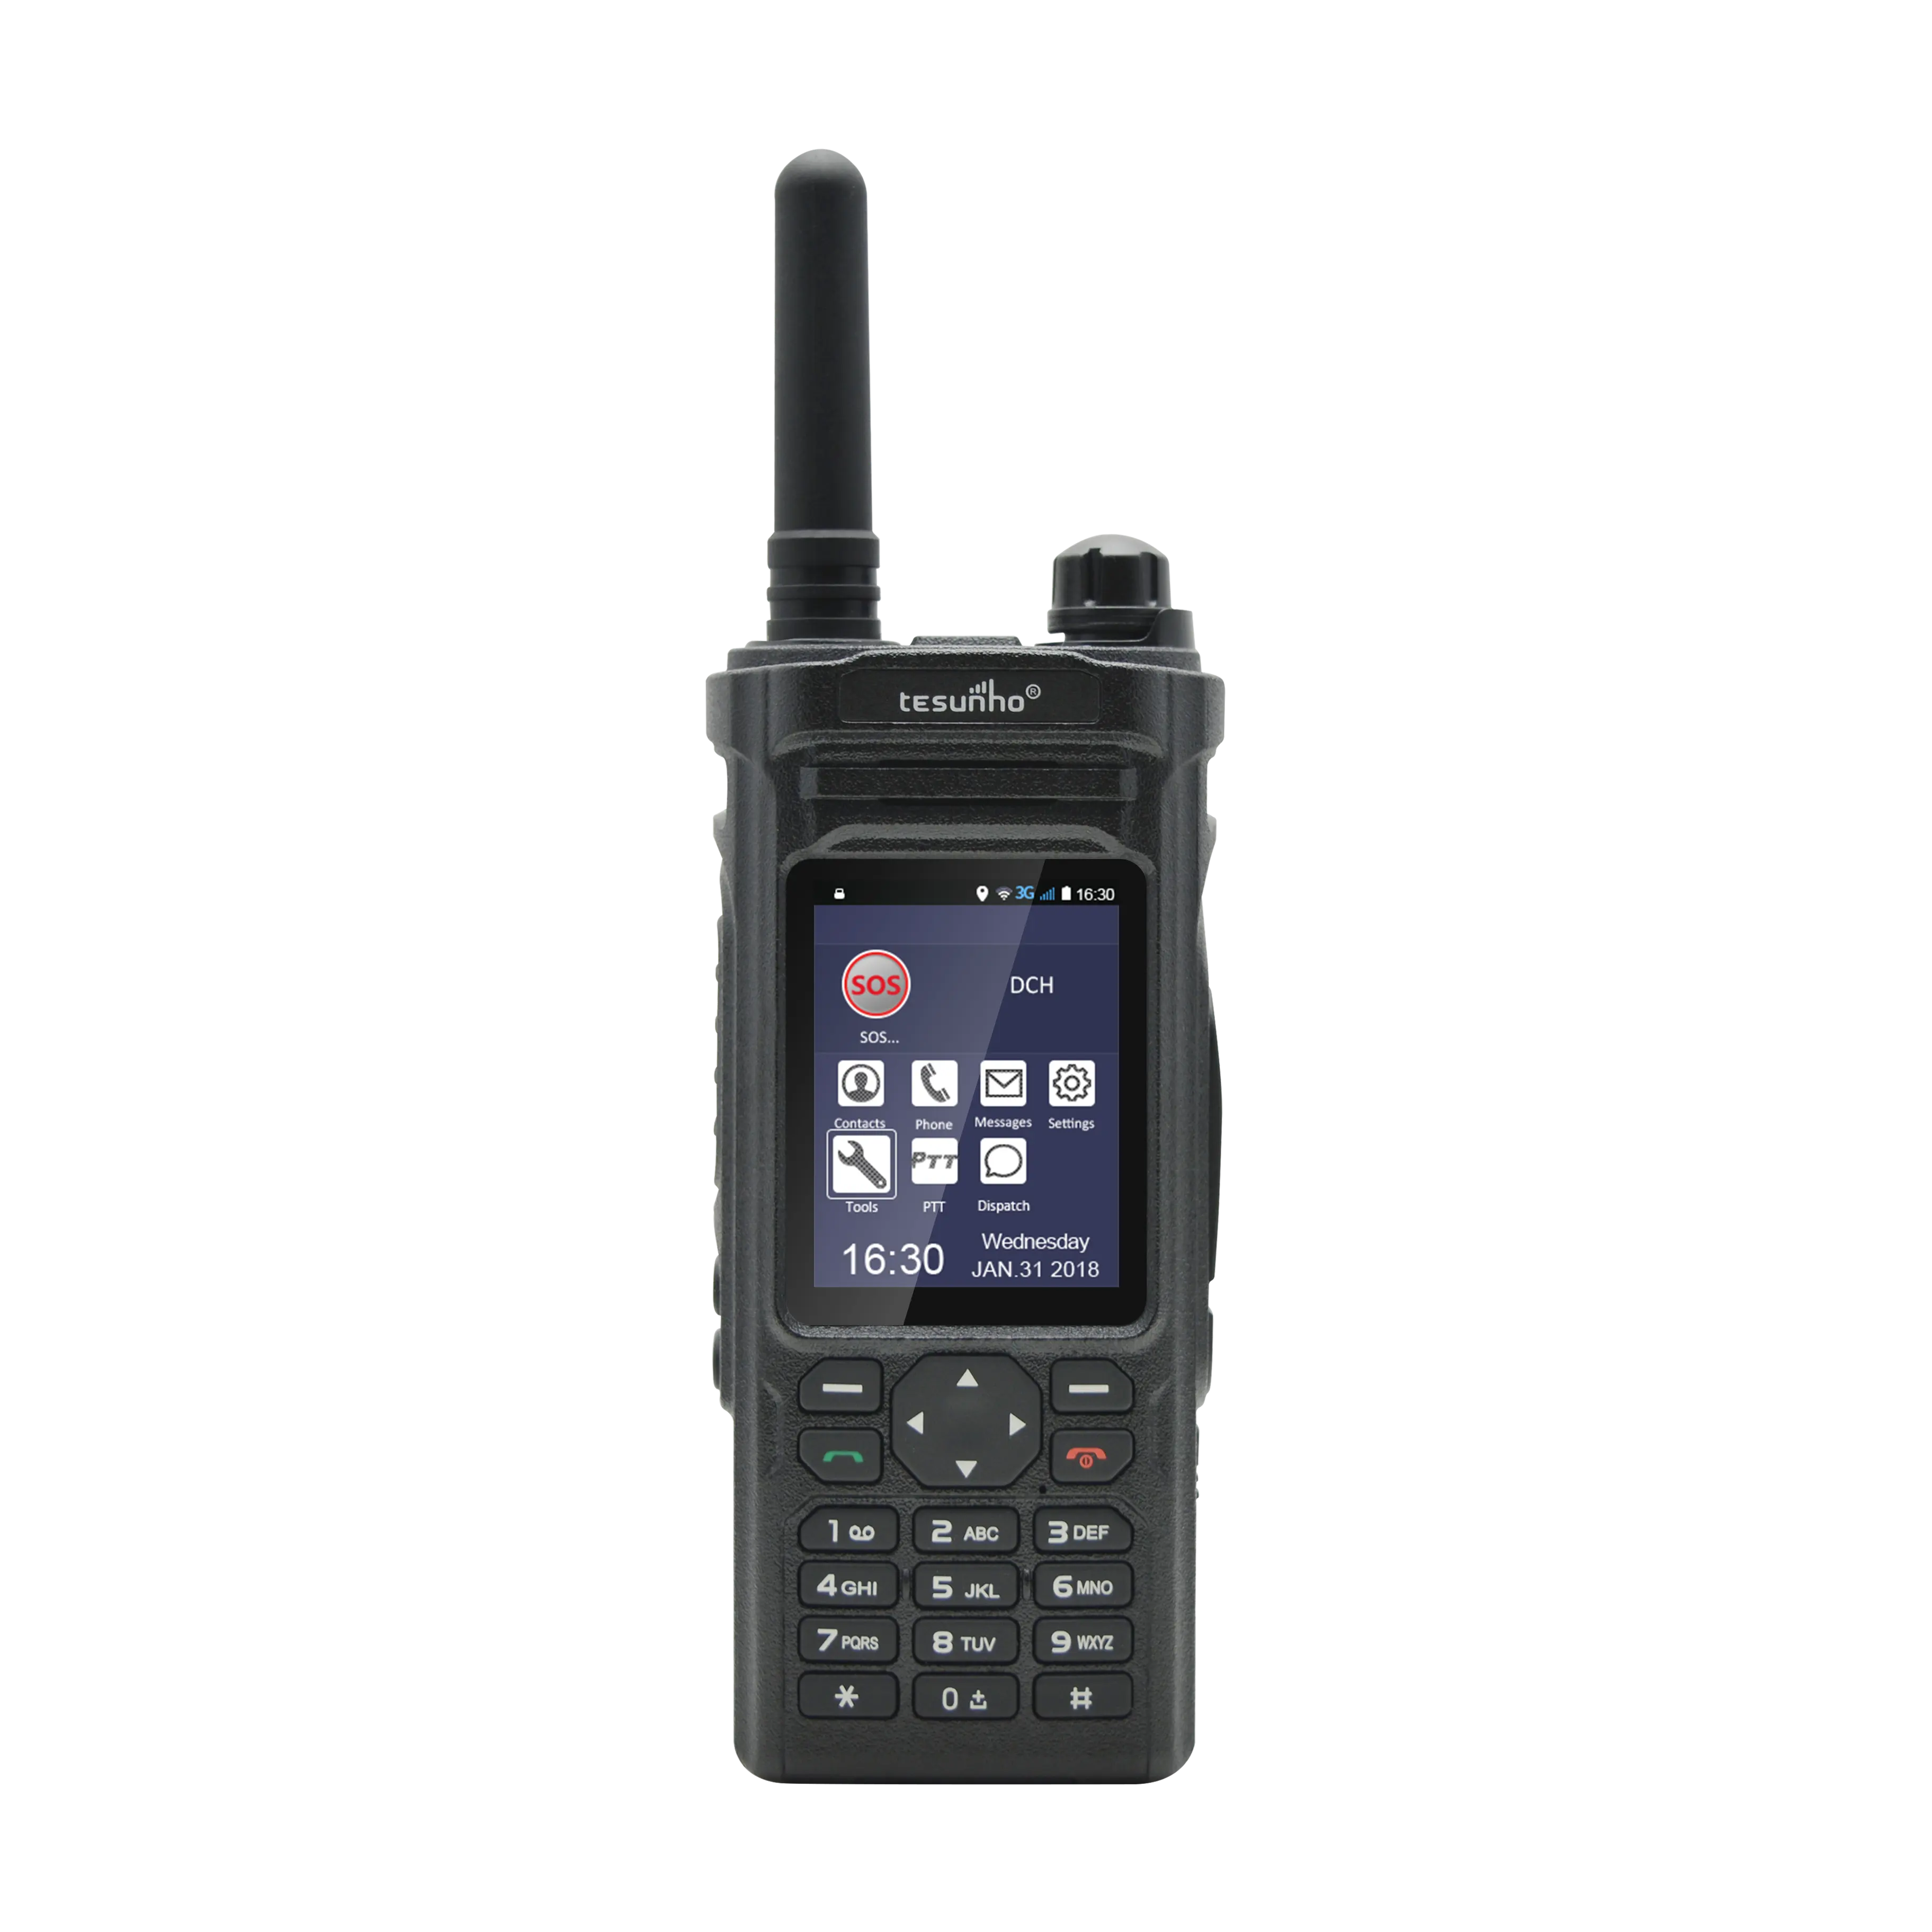 Tesunho High Tech Handheld Politie Gebruik Radio Android Walkie Talkie Telefoon Militaire Radio